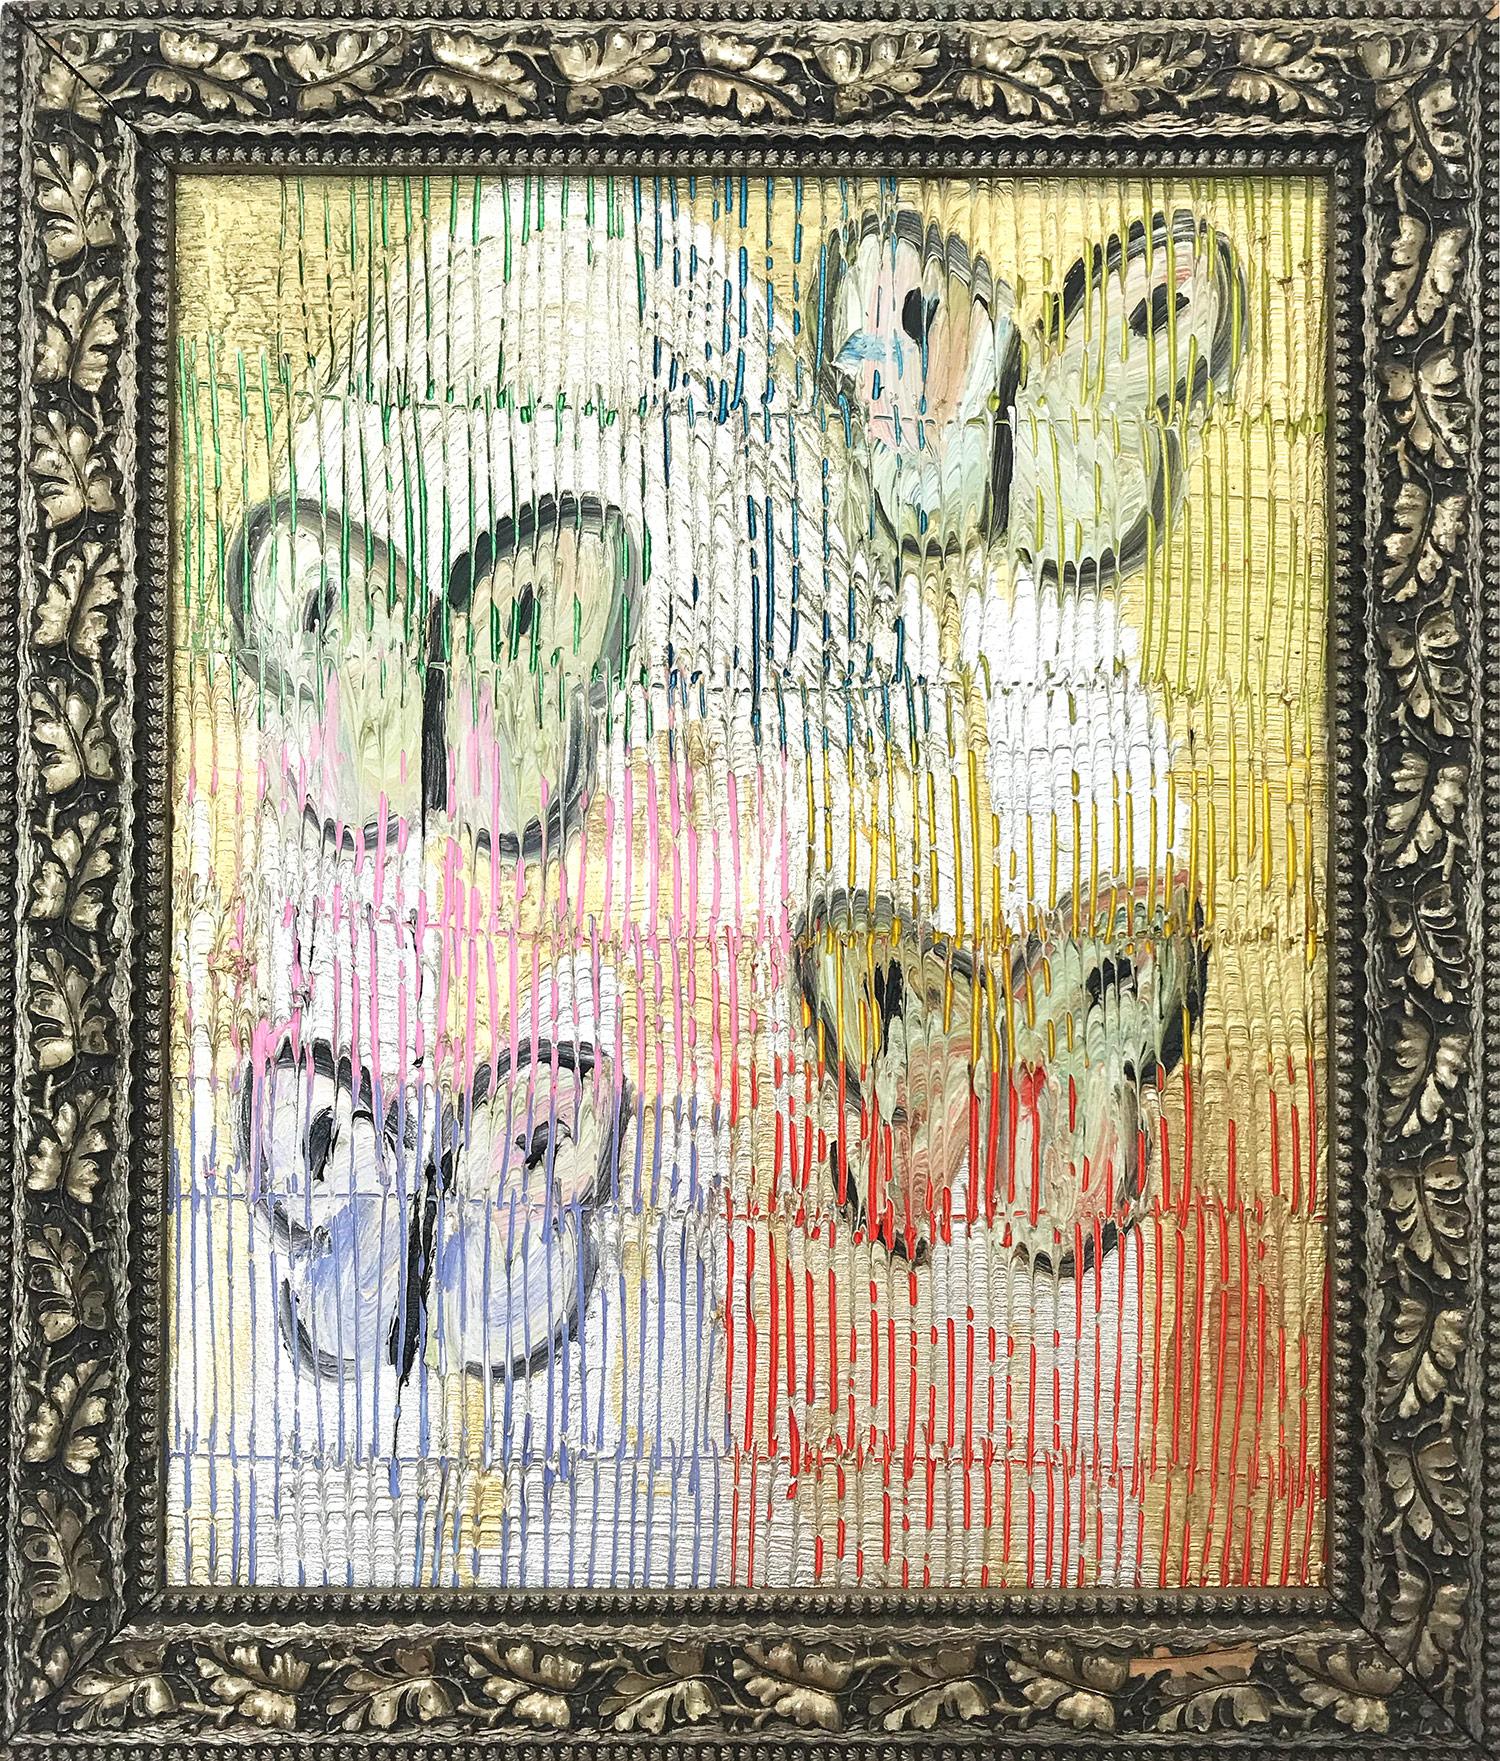 Hunt Slonem Animal Painting - "4 Flys" (Multicolor Butterflies on Gold Background Scoring) Oil on Wood